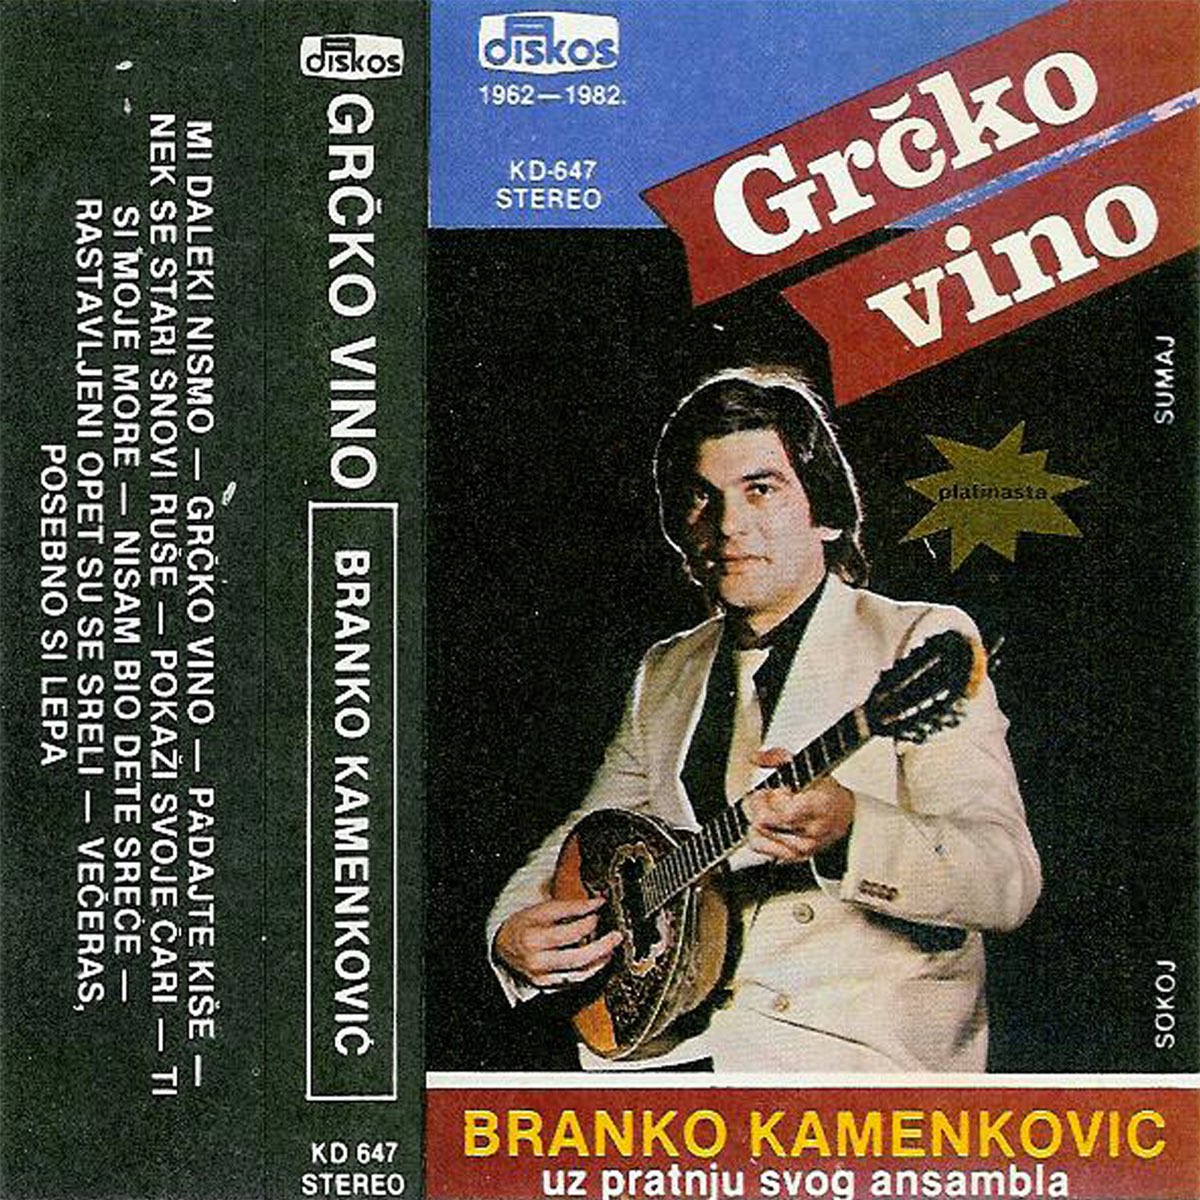 Grcko Vino by Branko Kamenkovic on Apple Music